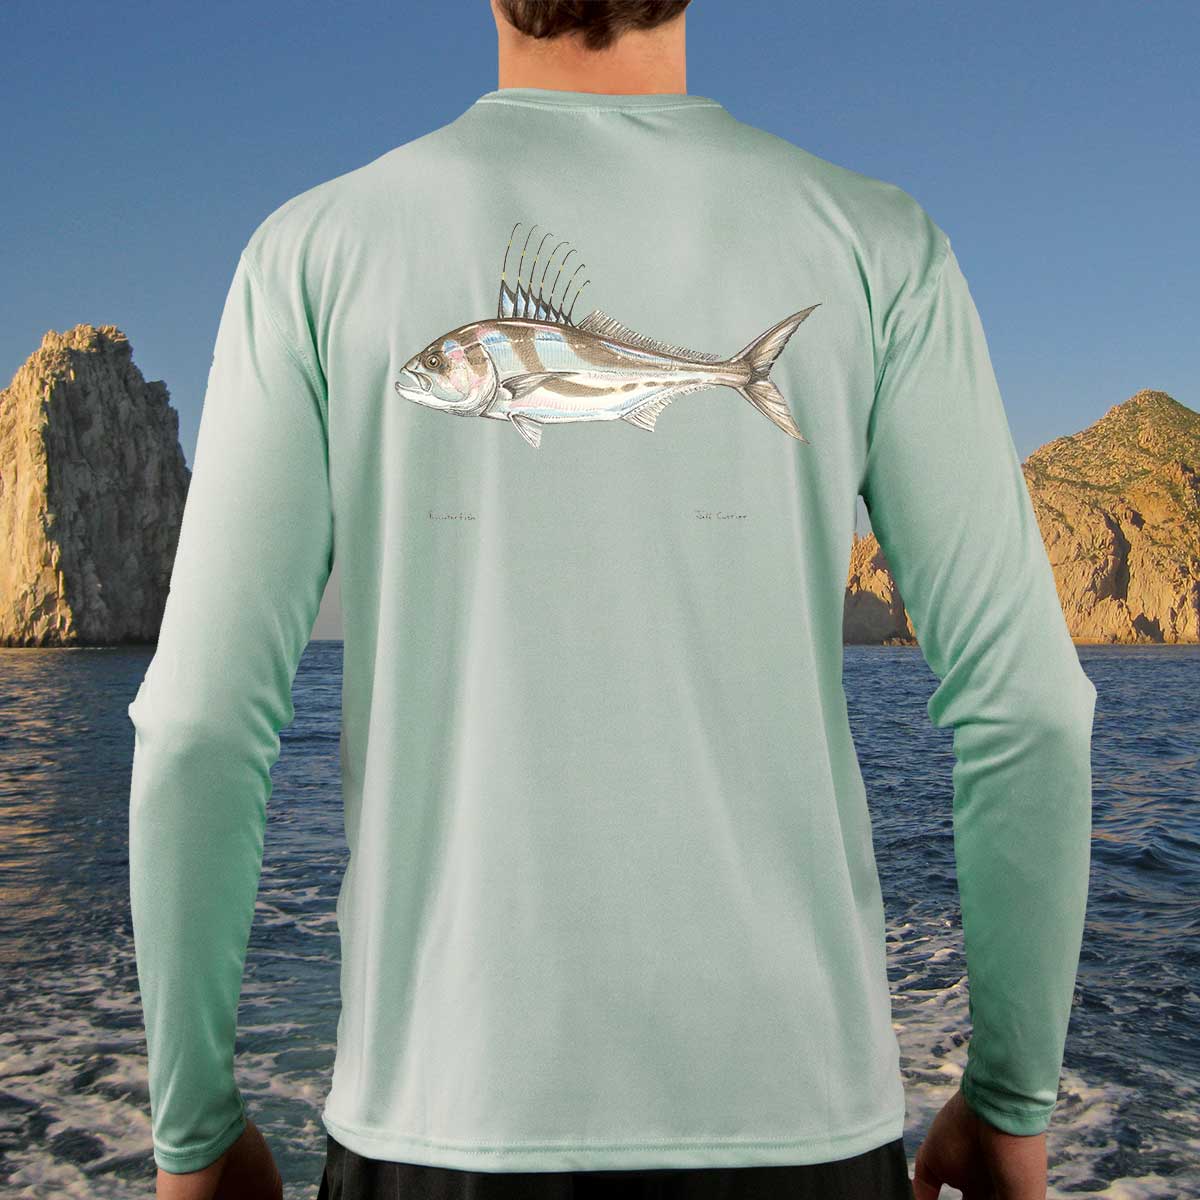 https://www.jeffcurrier.com/wp-content/uploads/2018/09/roosterfish-jeff-currier-long-sleeve-solar-shirt-seagrass.jpg